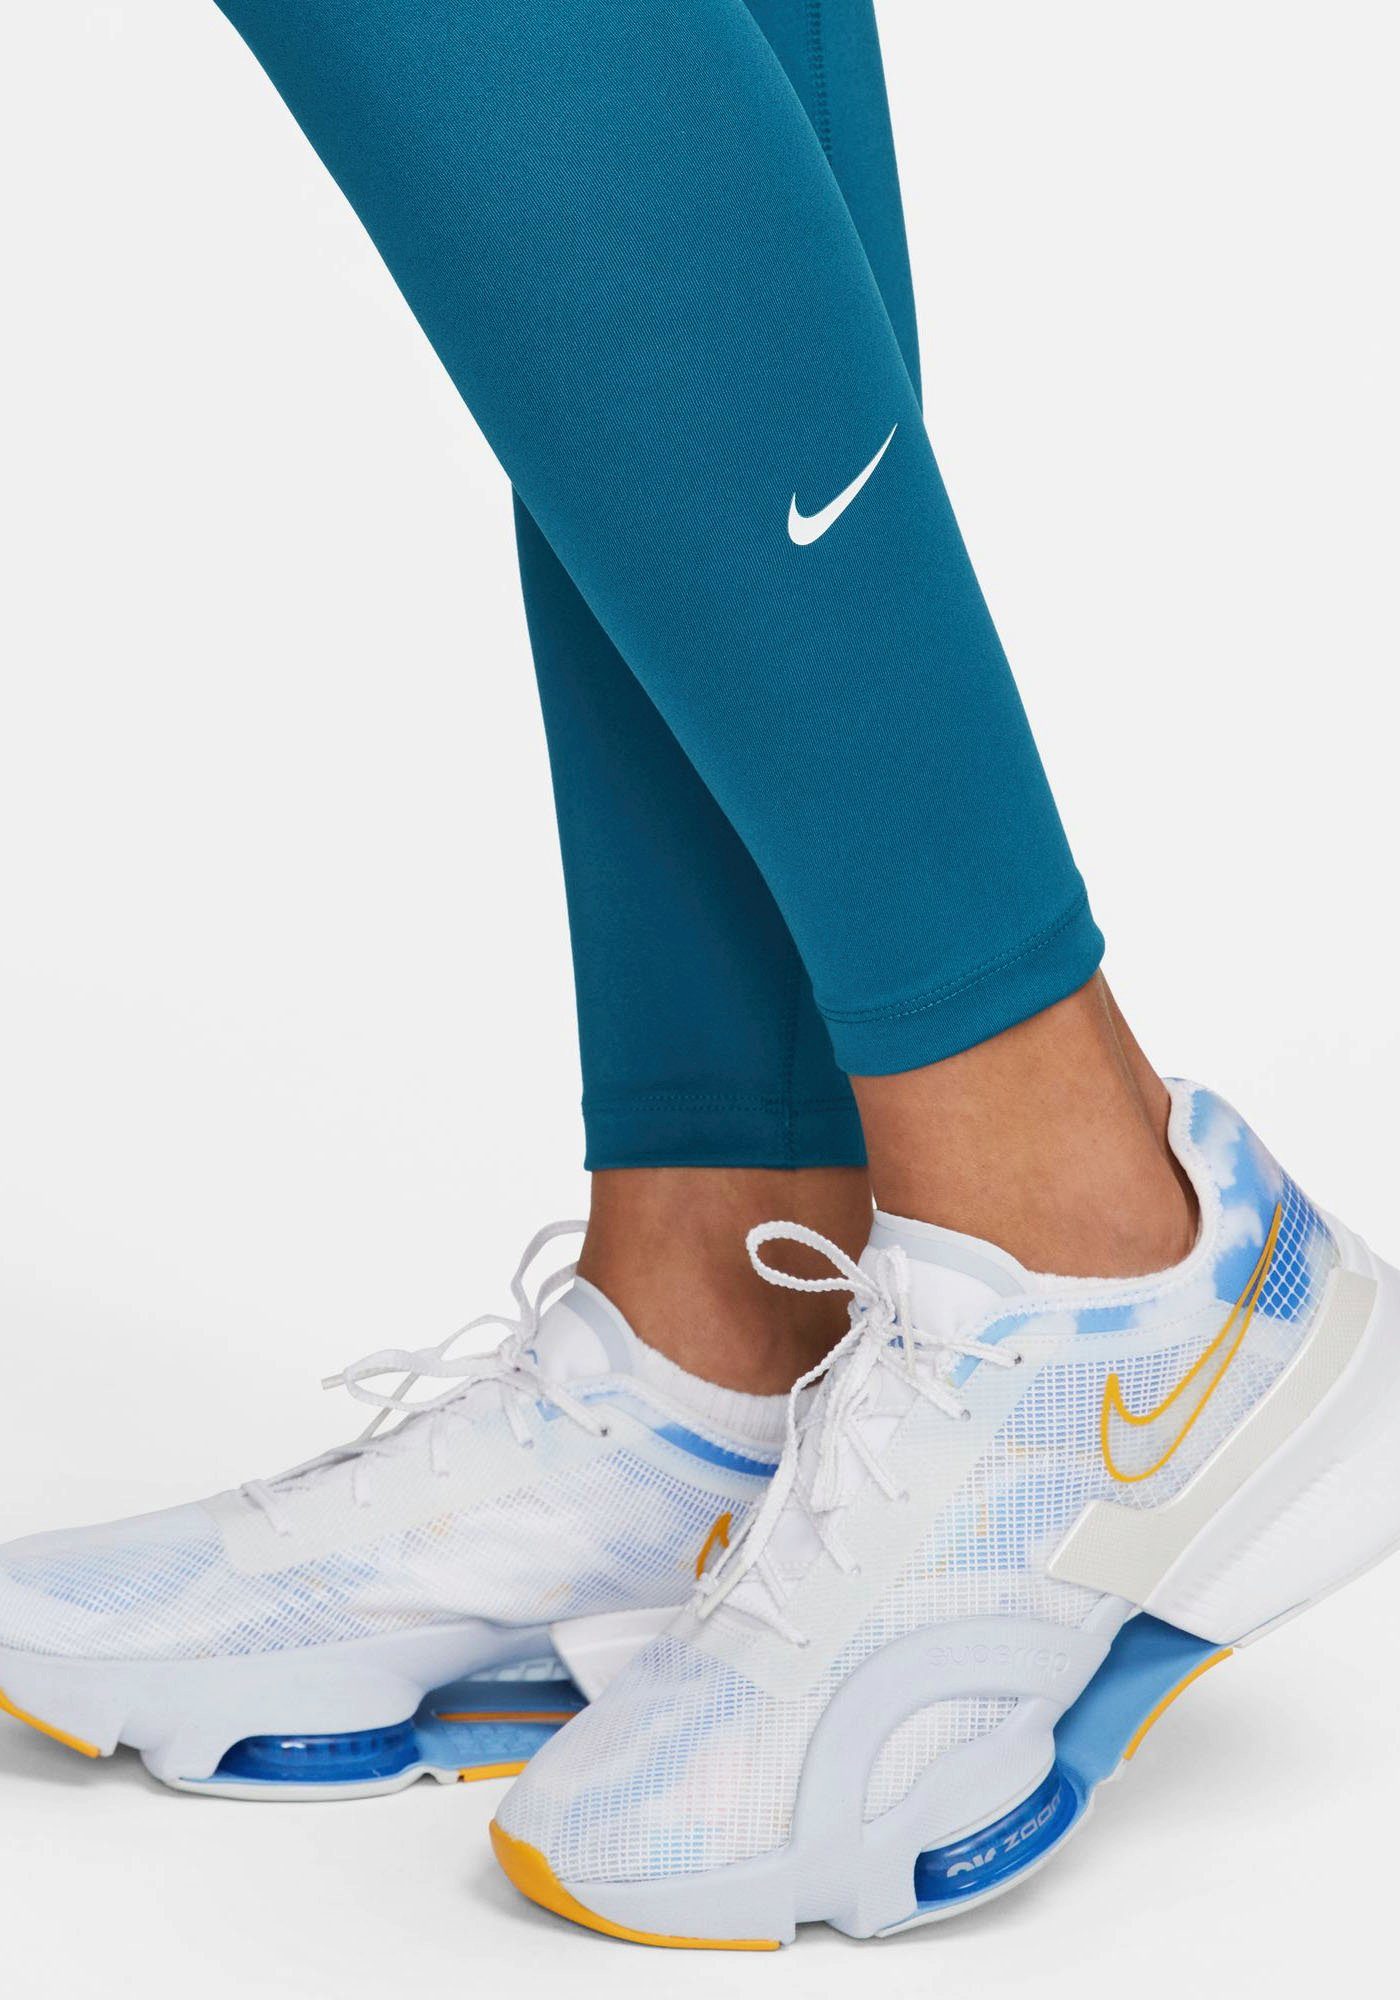 BLUE/WHITE LEGGINGS INDUSTRIAL WOMEN'S Trainingstights HIGH-RISE Nike ONE